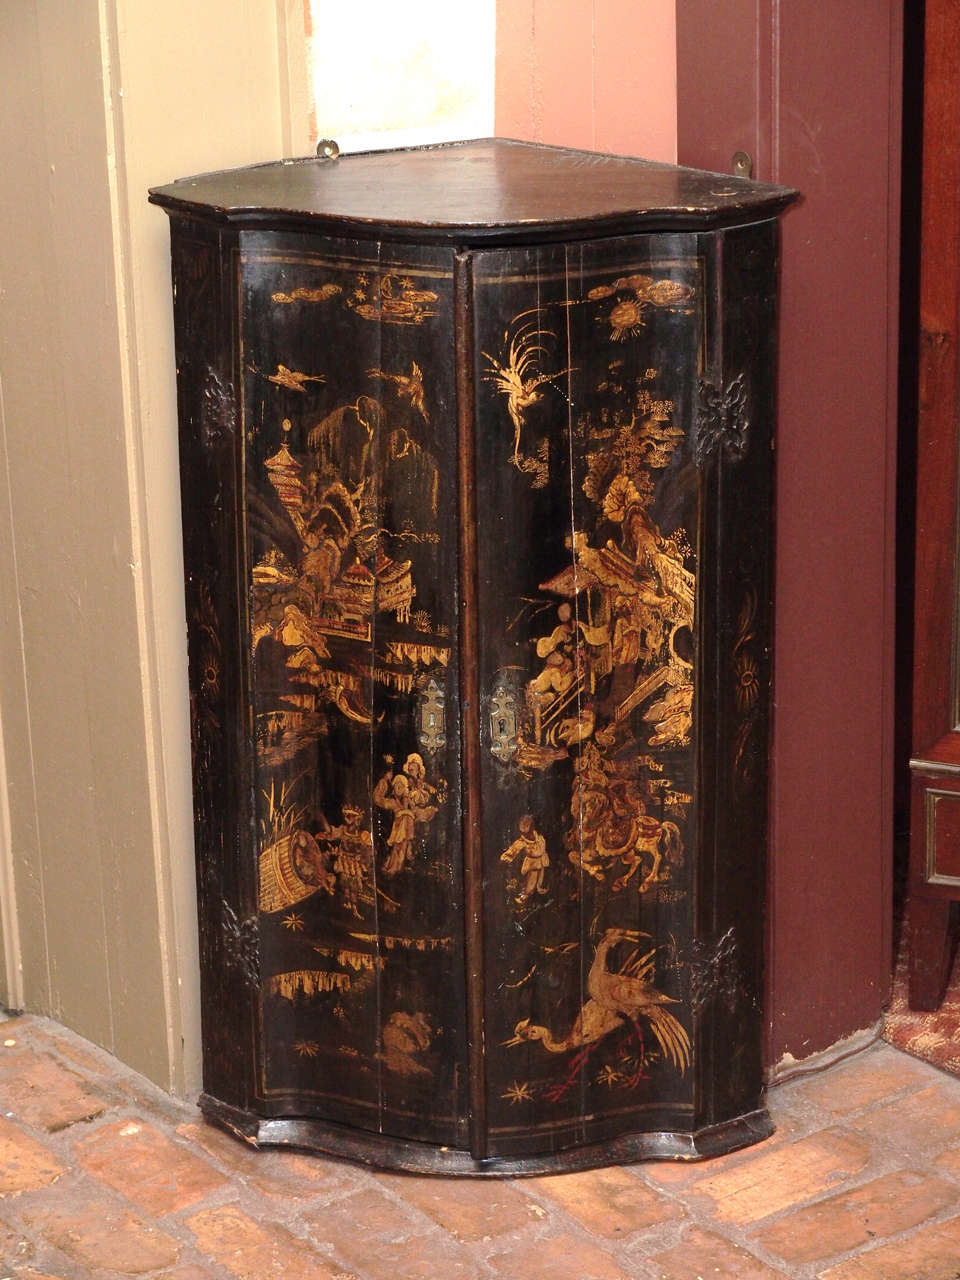 Late 18th century English lacquerwork corner cabinet in 